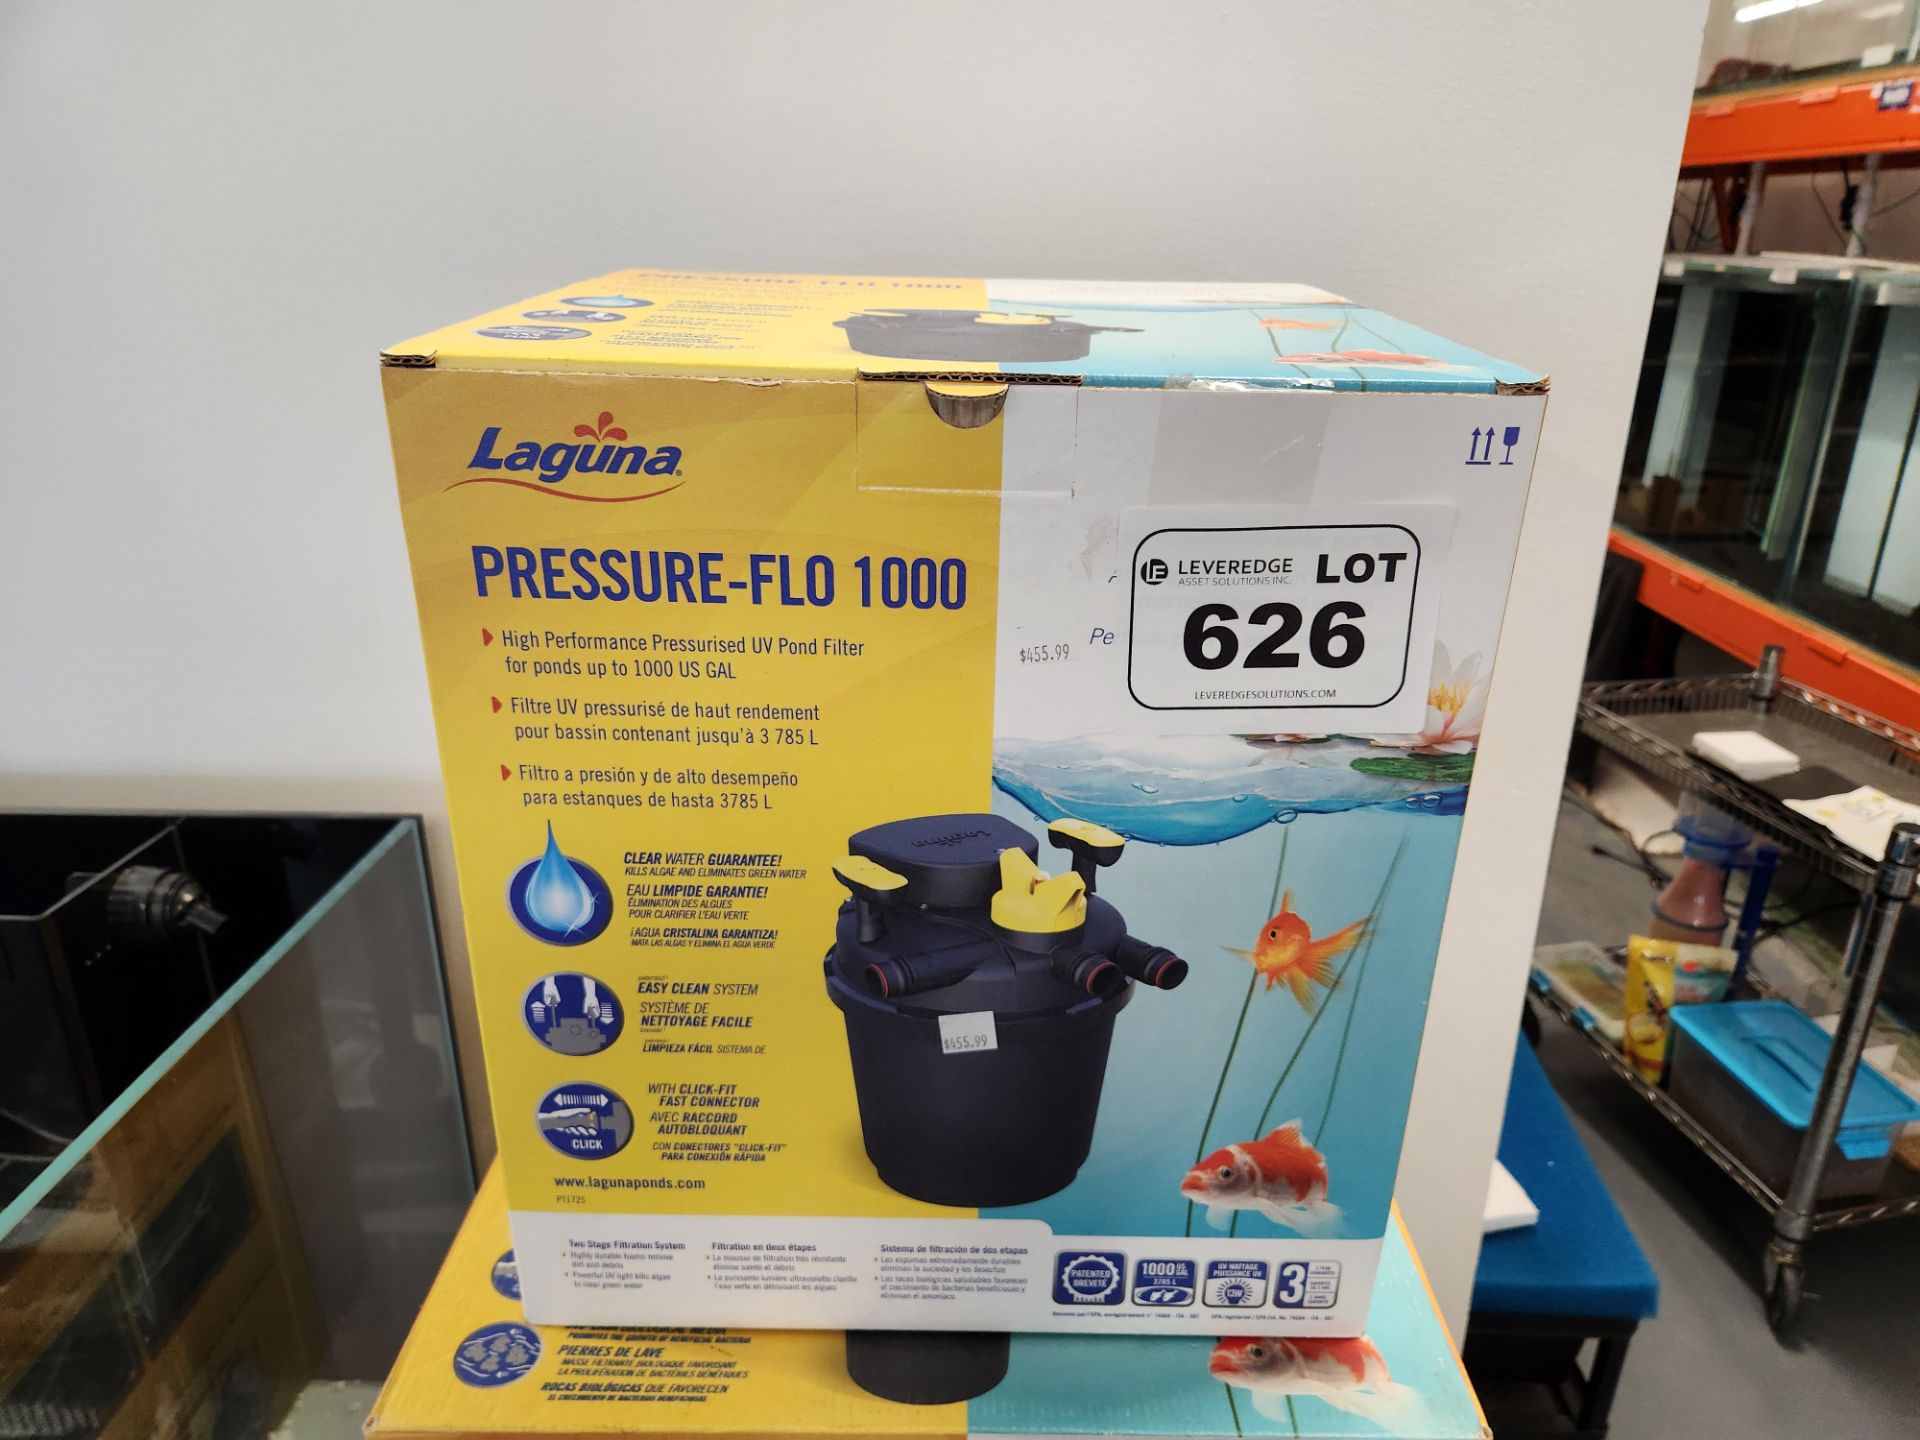 Laguna Pressure Flo-1000 UV Pond Filter